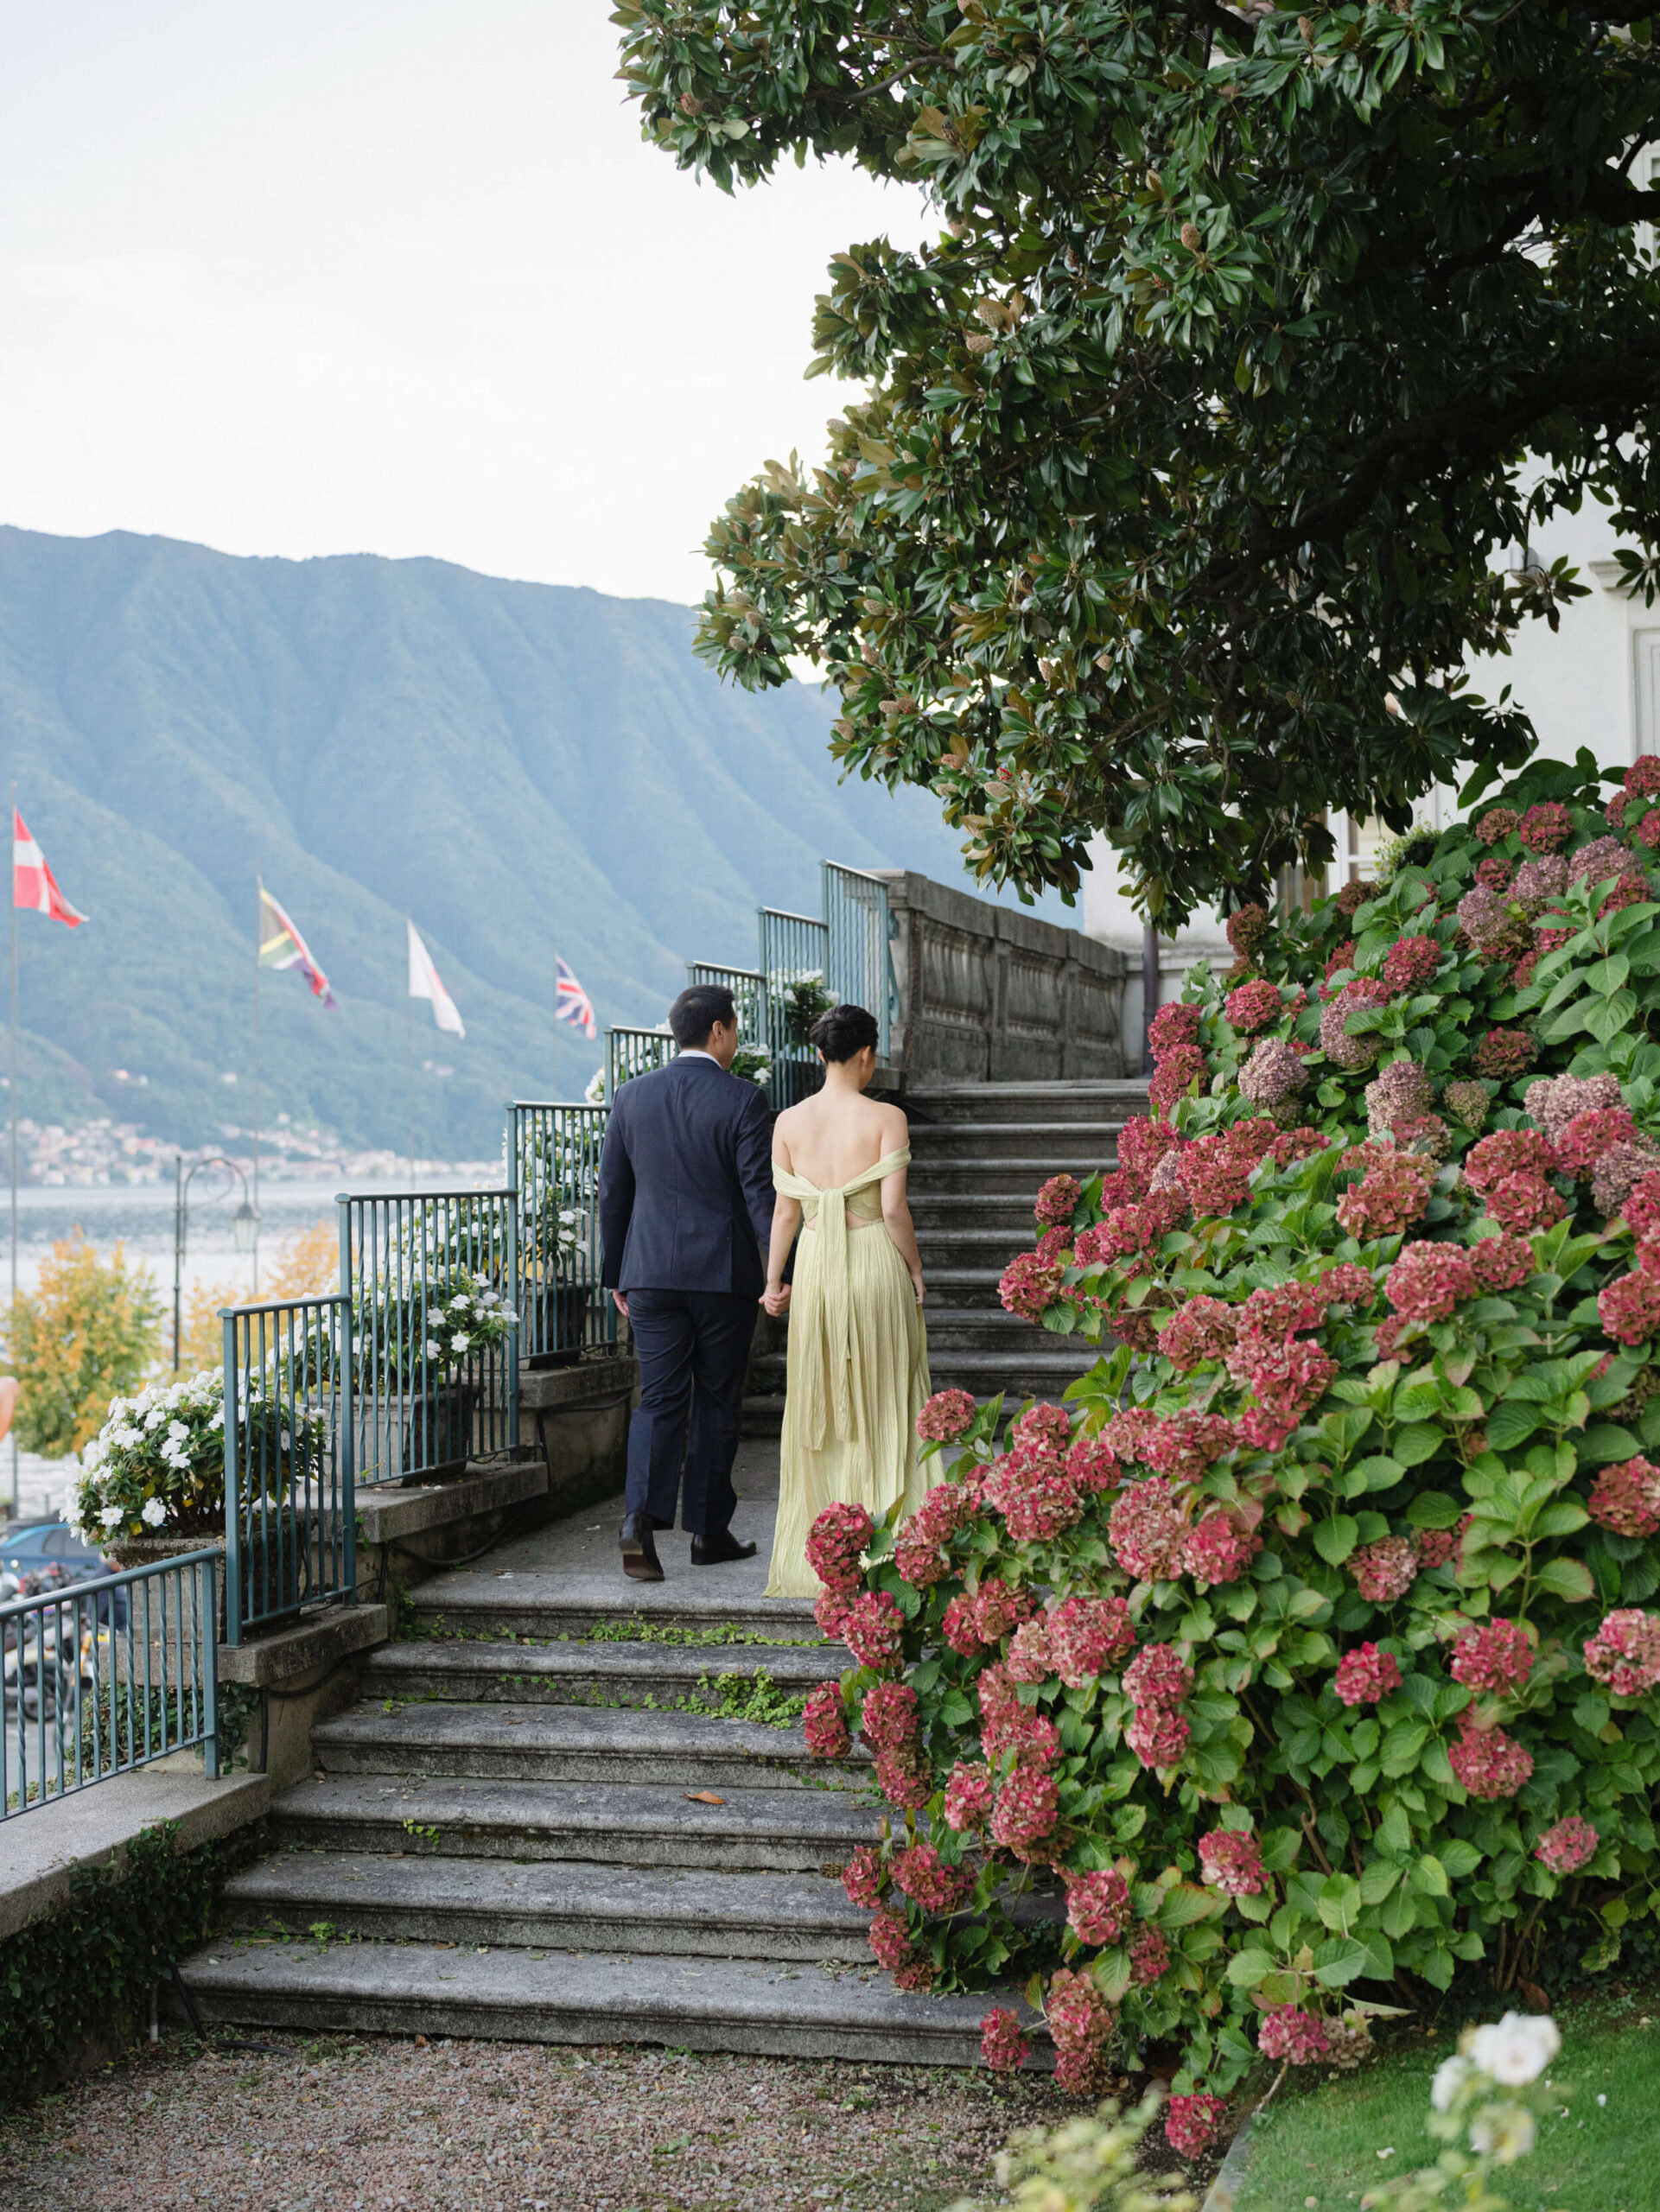 pathwalk overlooking Lake Como